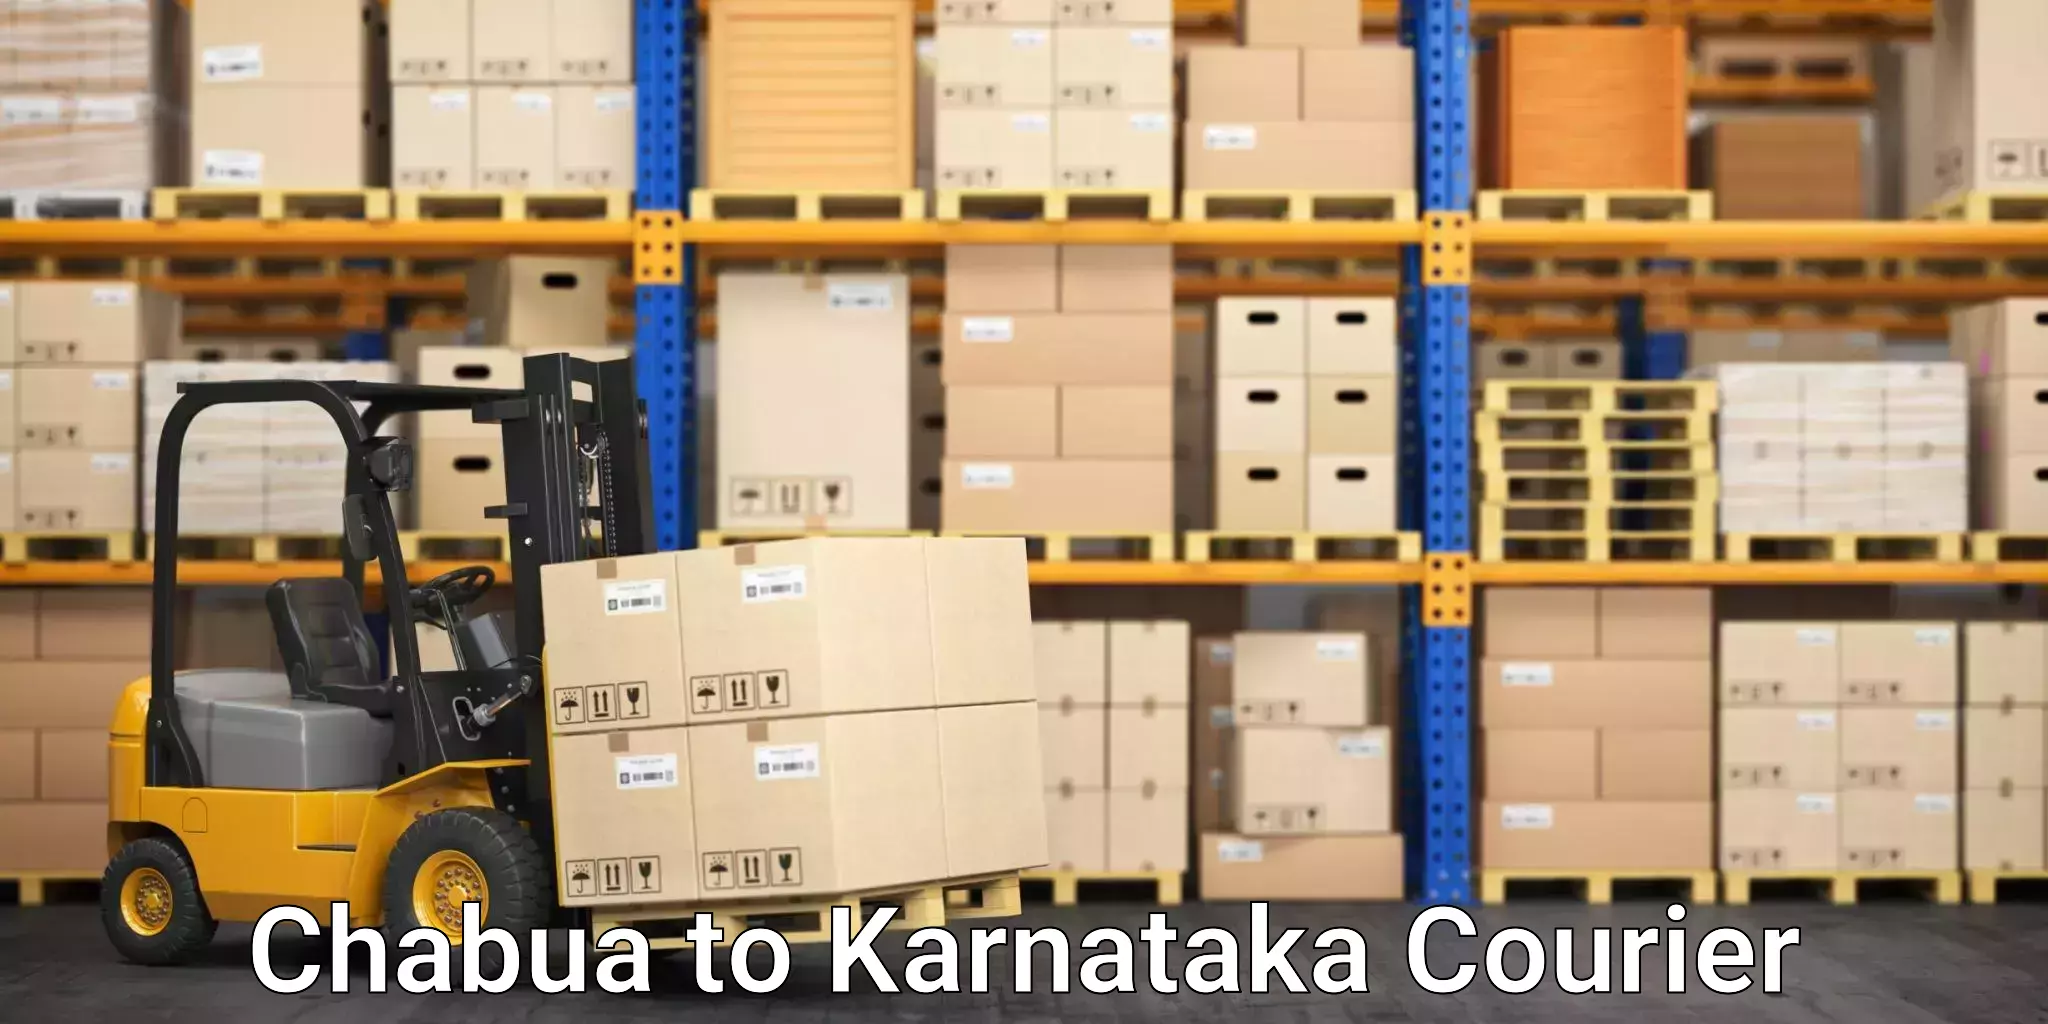 Tech-enabled shipping Chabua to Banavara